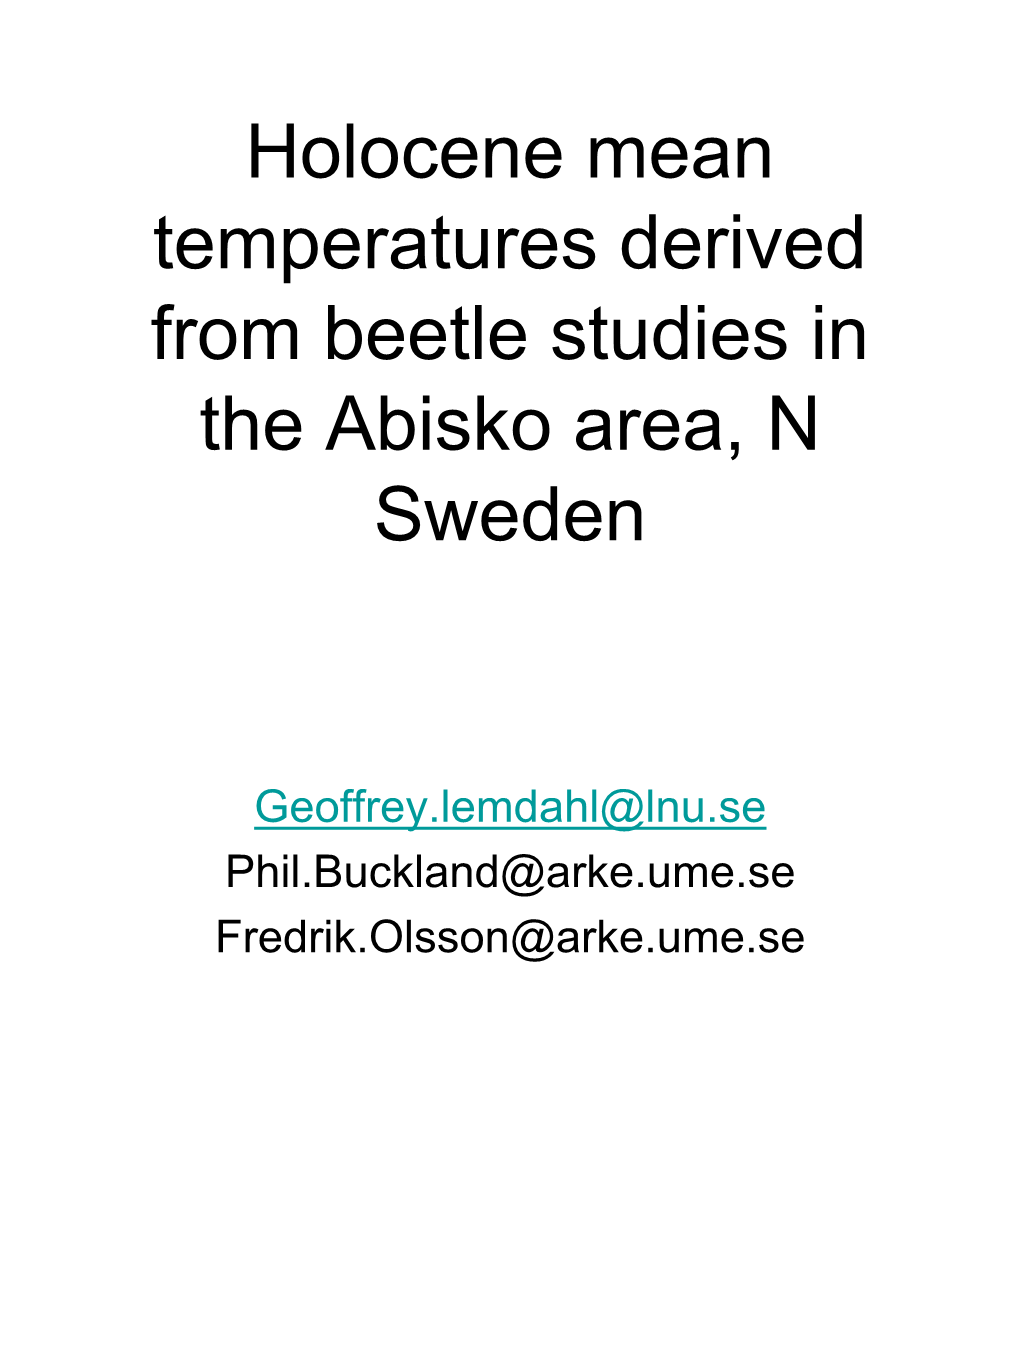 Etle Studies in the Abisko Area, N Sweden